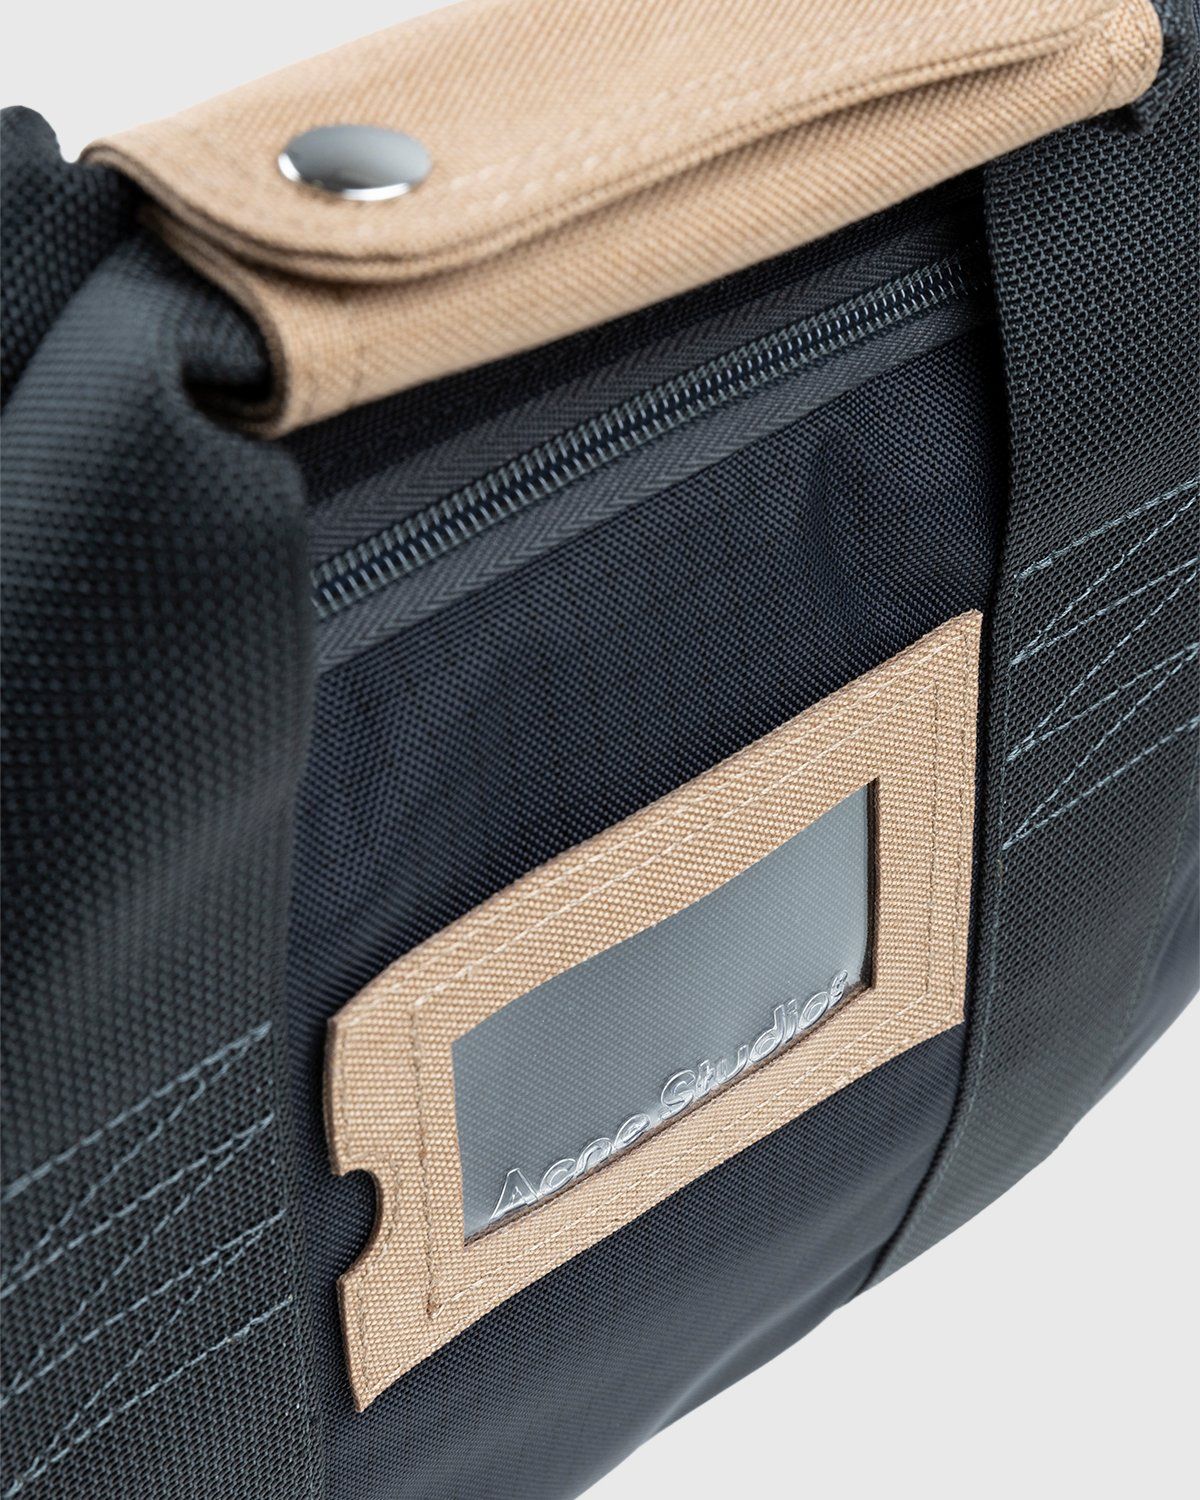 Acne Studios – Nylon Crossbody Laptop Bag Black/Khaki Green - Image 7